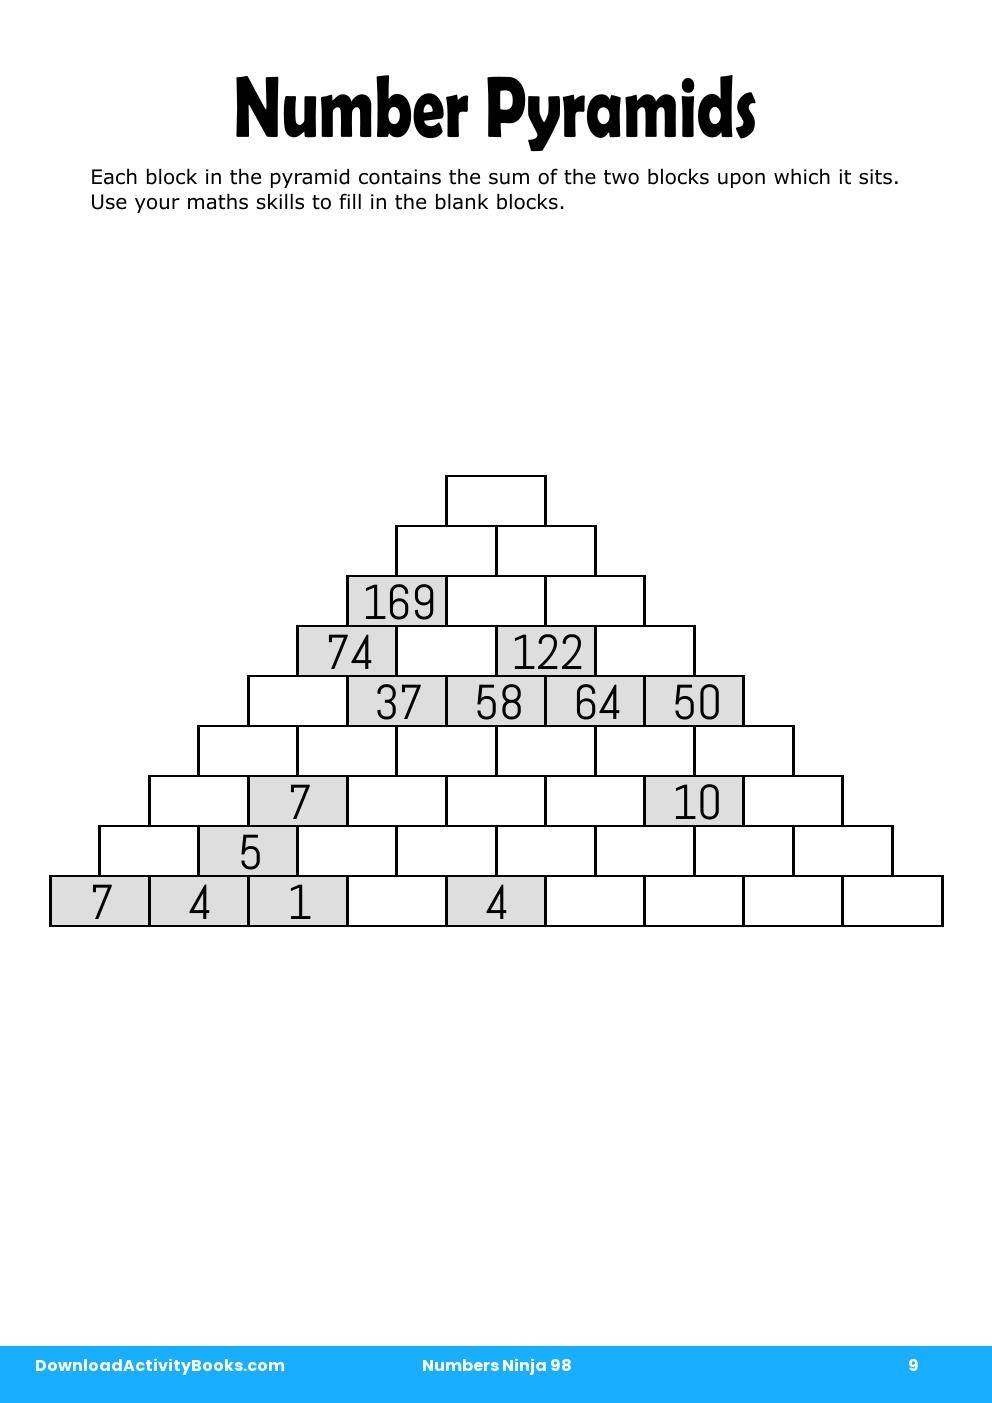 Number Pyramids in Numbers Ninja 98